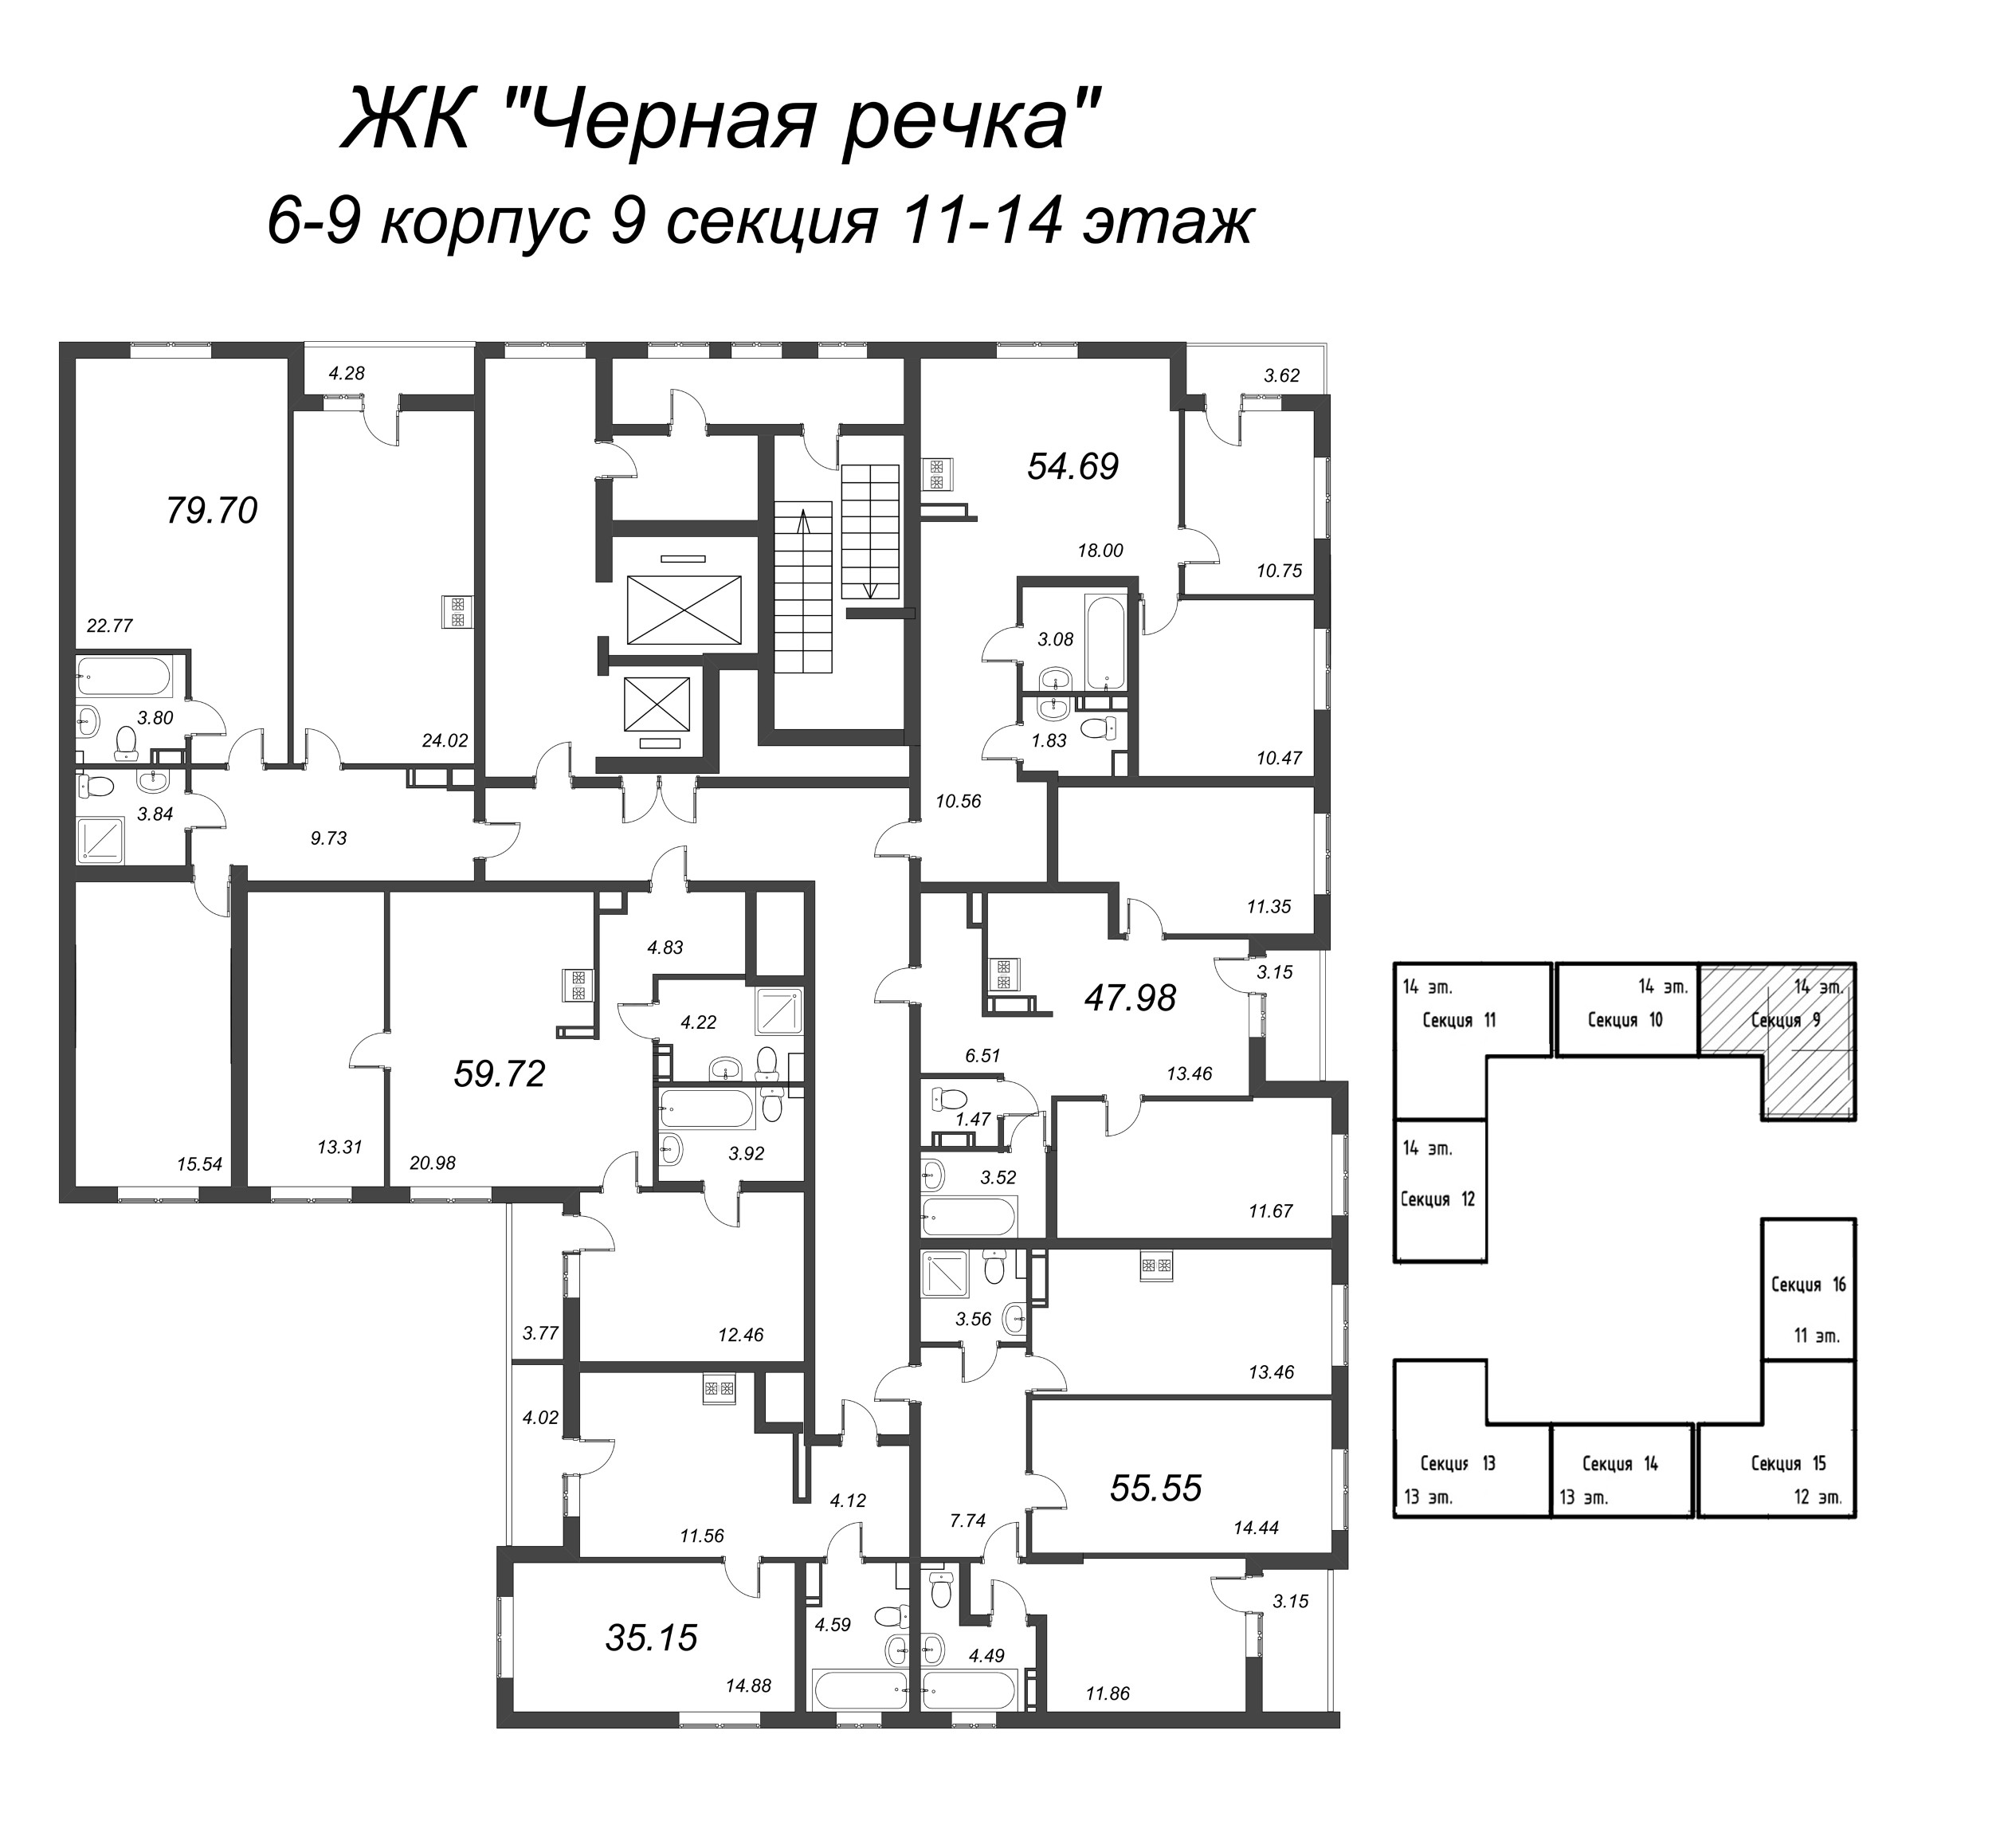 3-комнатная (Евро) квартира, 59.72 м² - планировка этажа